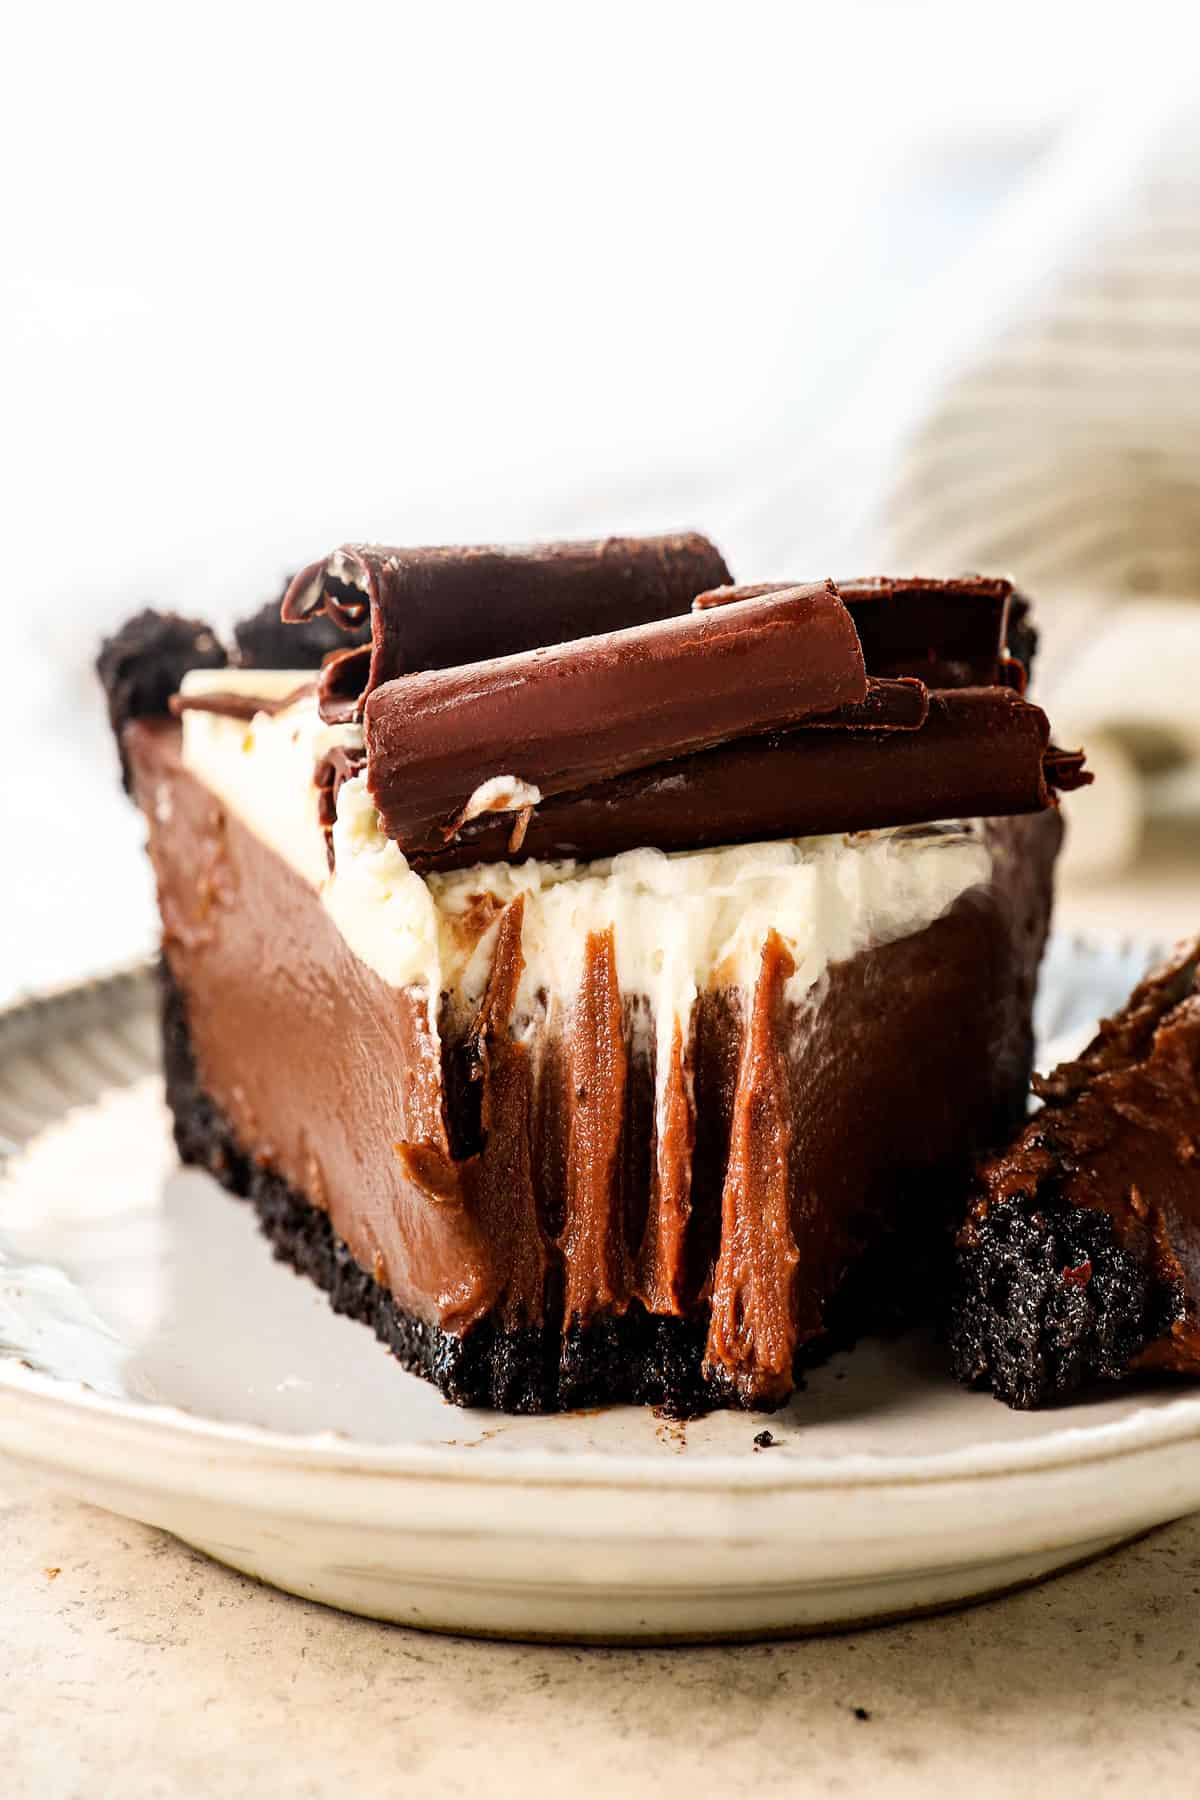 https://carlsbadcravings.com/wp-content/uploads/2022/11/chocolate-cream-pie-1.jpg